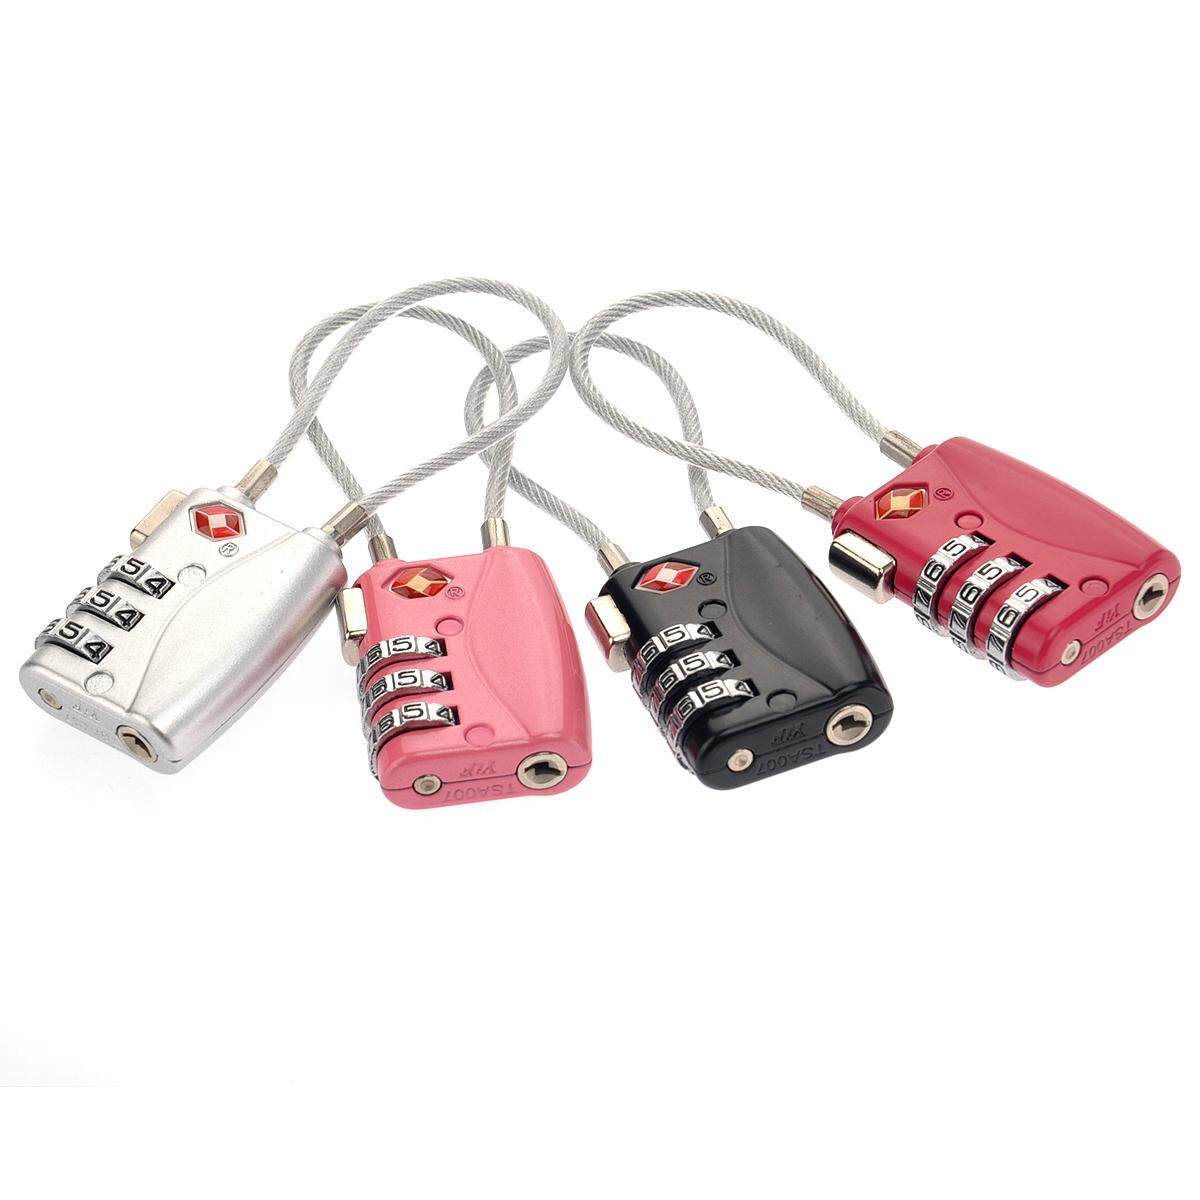 Backpack Travel Lock Security Luggage Locks 3-Digit Combination Padlock TSA Lock Cable 5 Pcs Black,Red,Pink,Silver, Blue